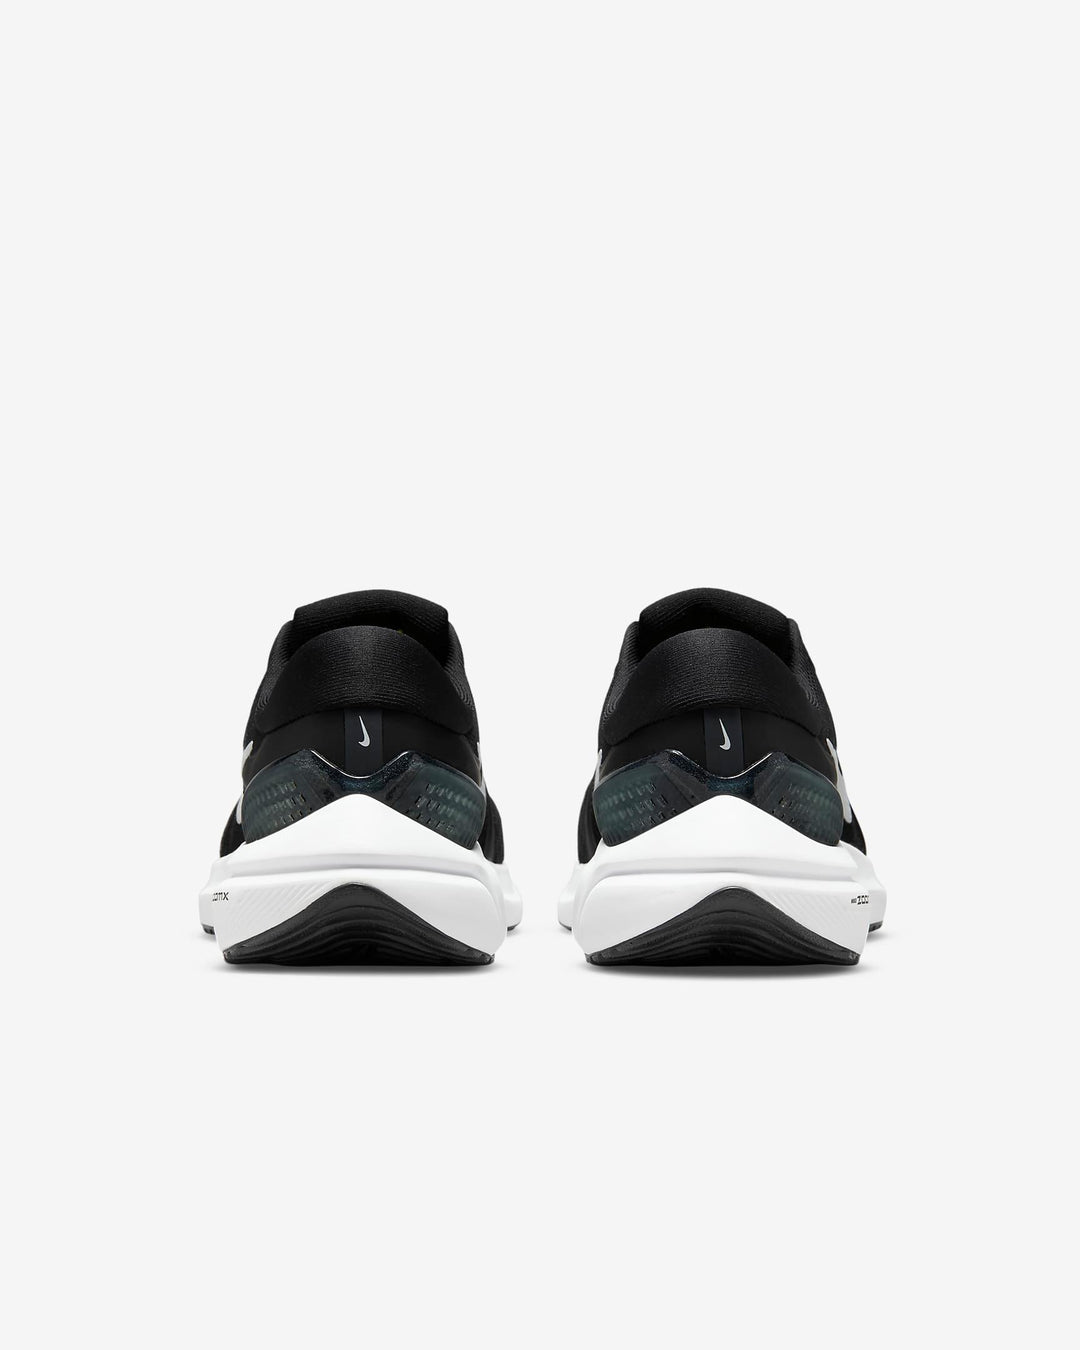 Giày Nike Vomero 16 Women Road Running Shoes #Black - Kallos Vietnam